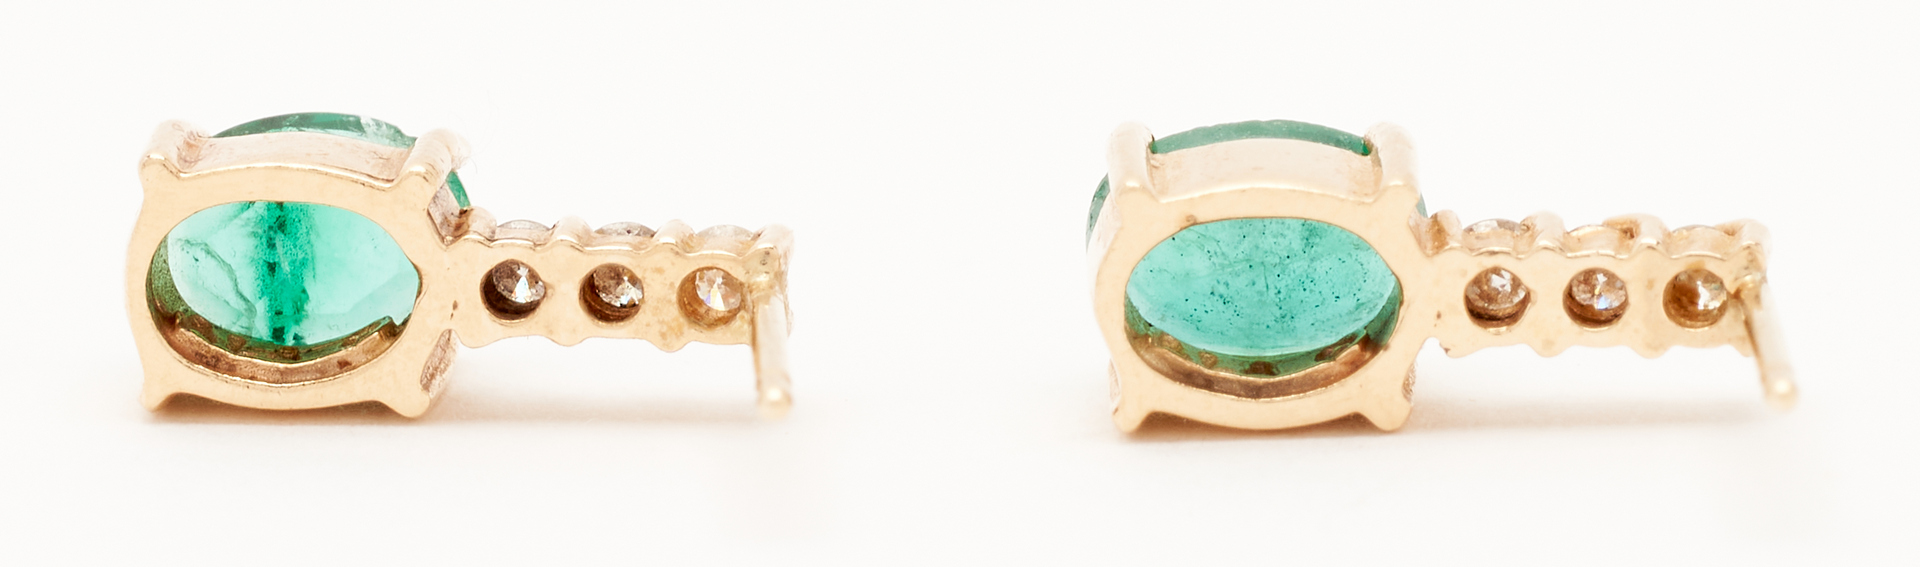 Lot 1135: Three (3) Pair Earrings, incl. Emerald, Ruby, & Jadeite